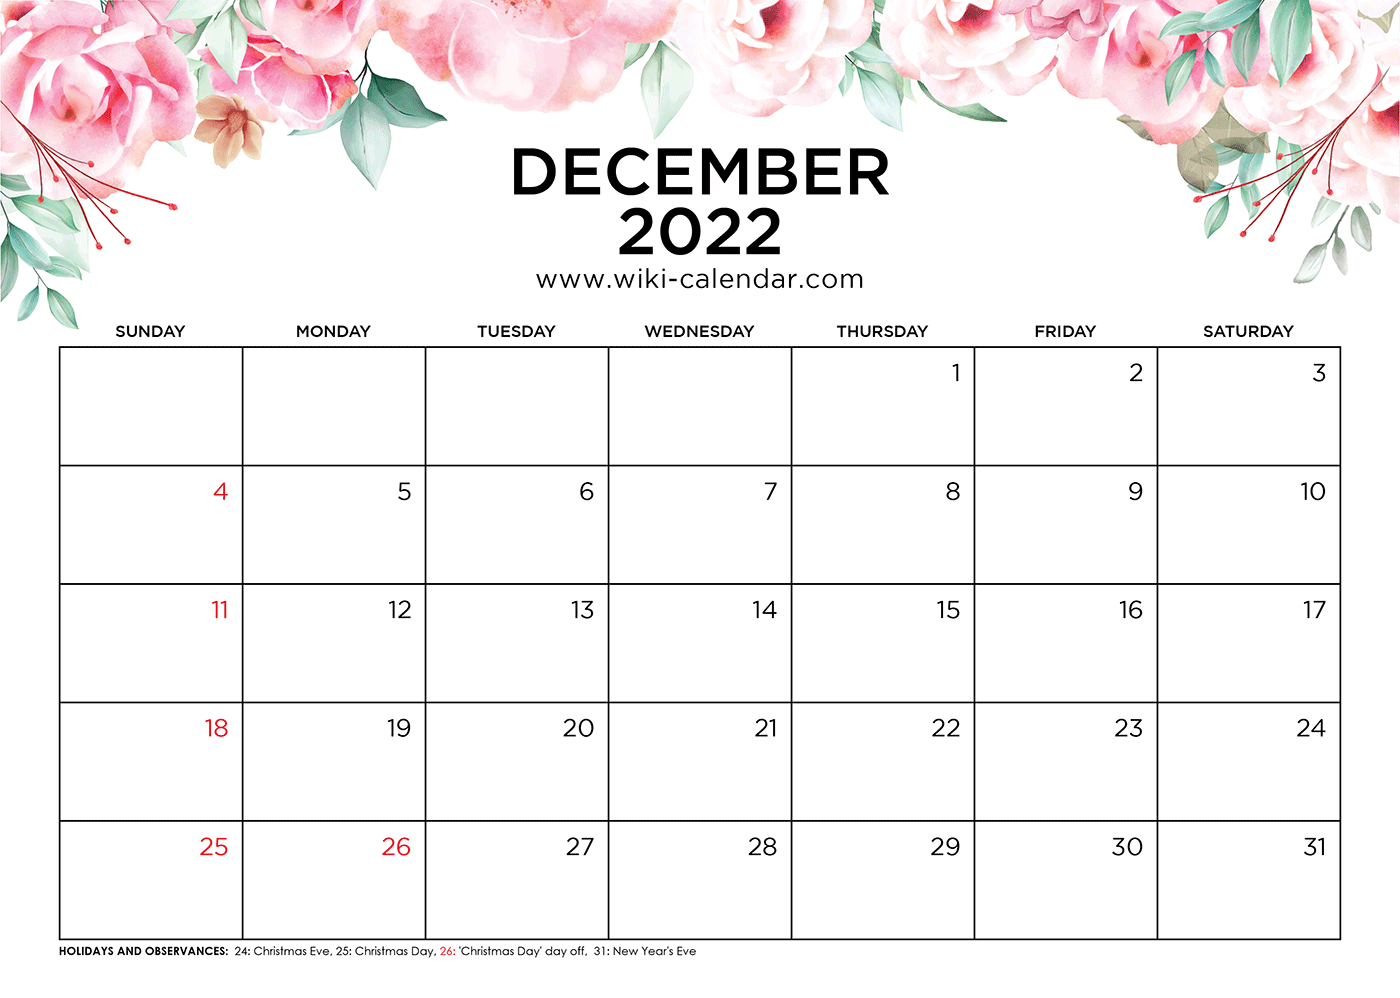 December 2022 Calendar Free Printable December 2022 Calendars - Wiki Calendar